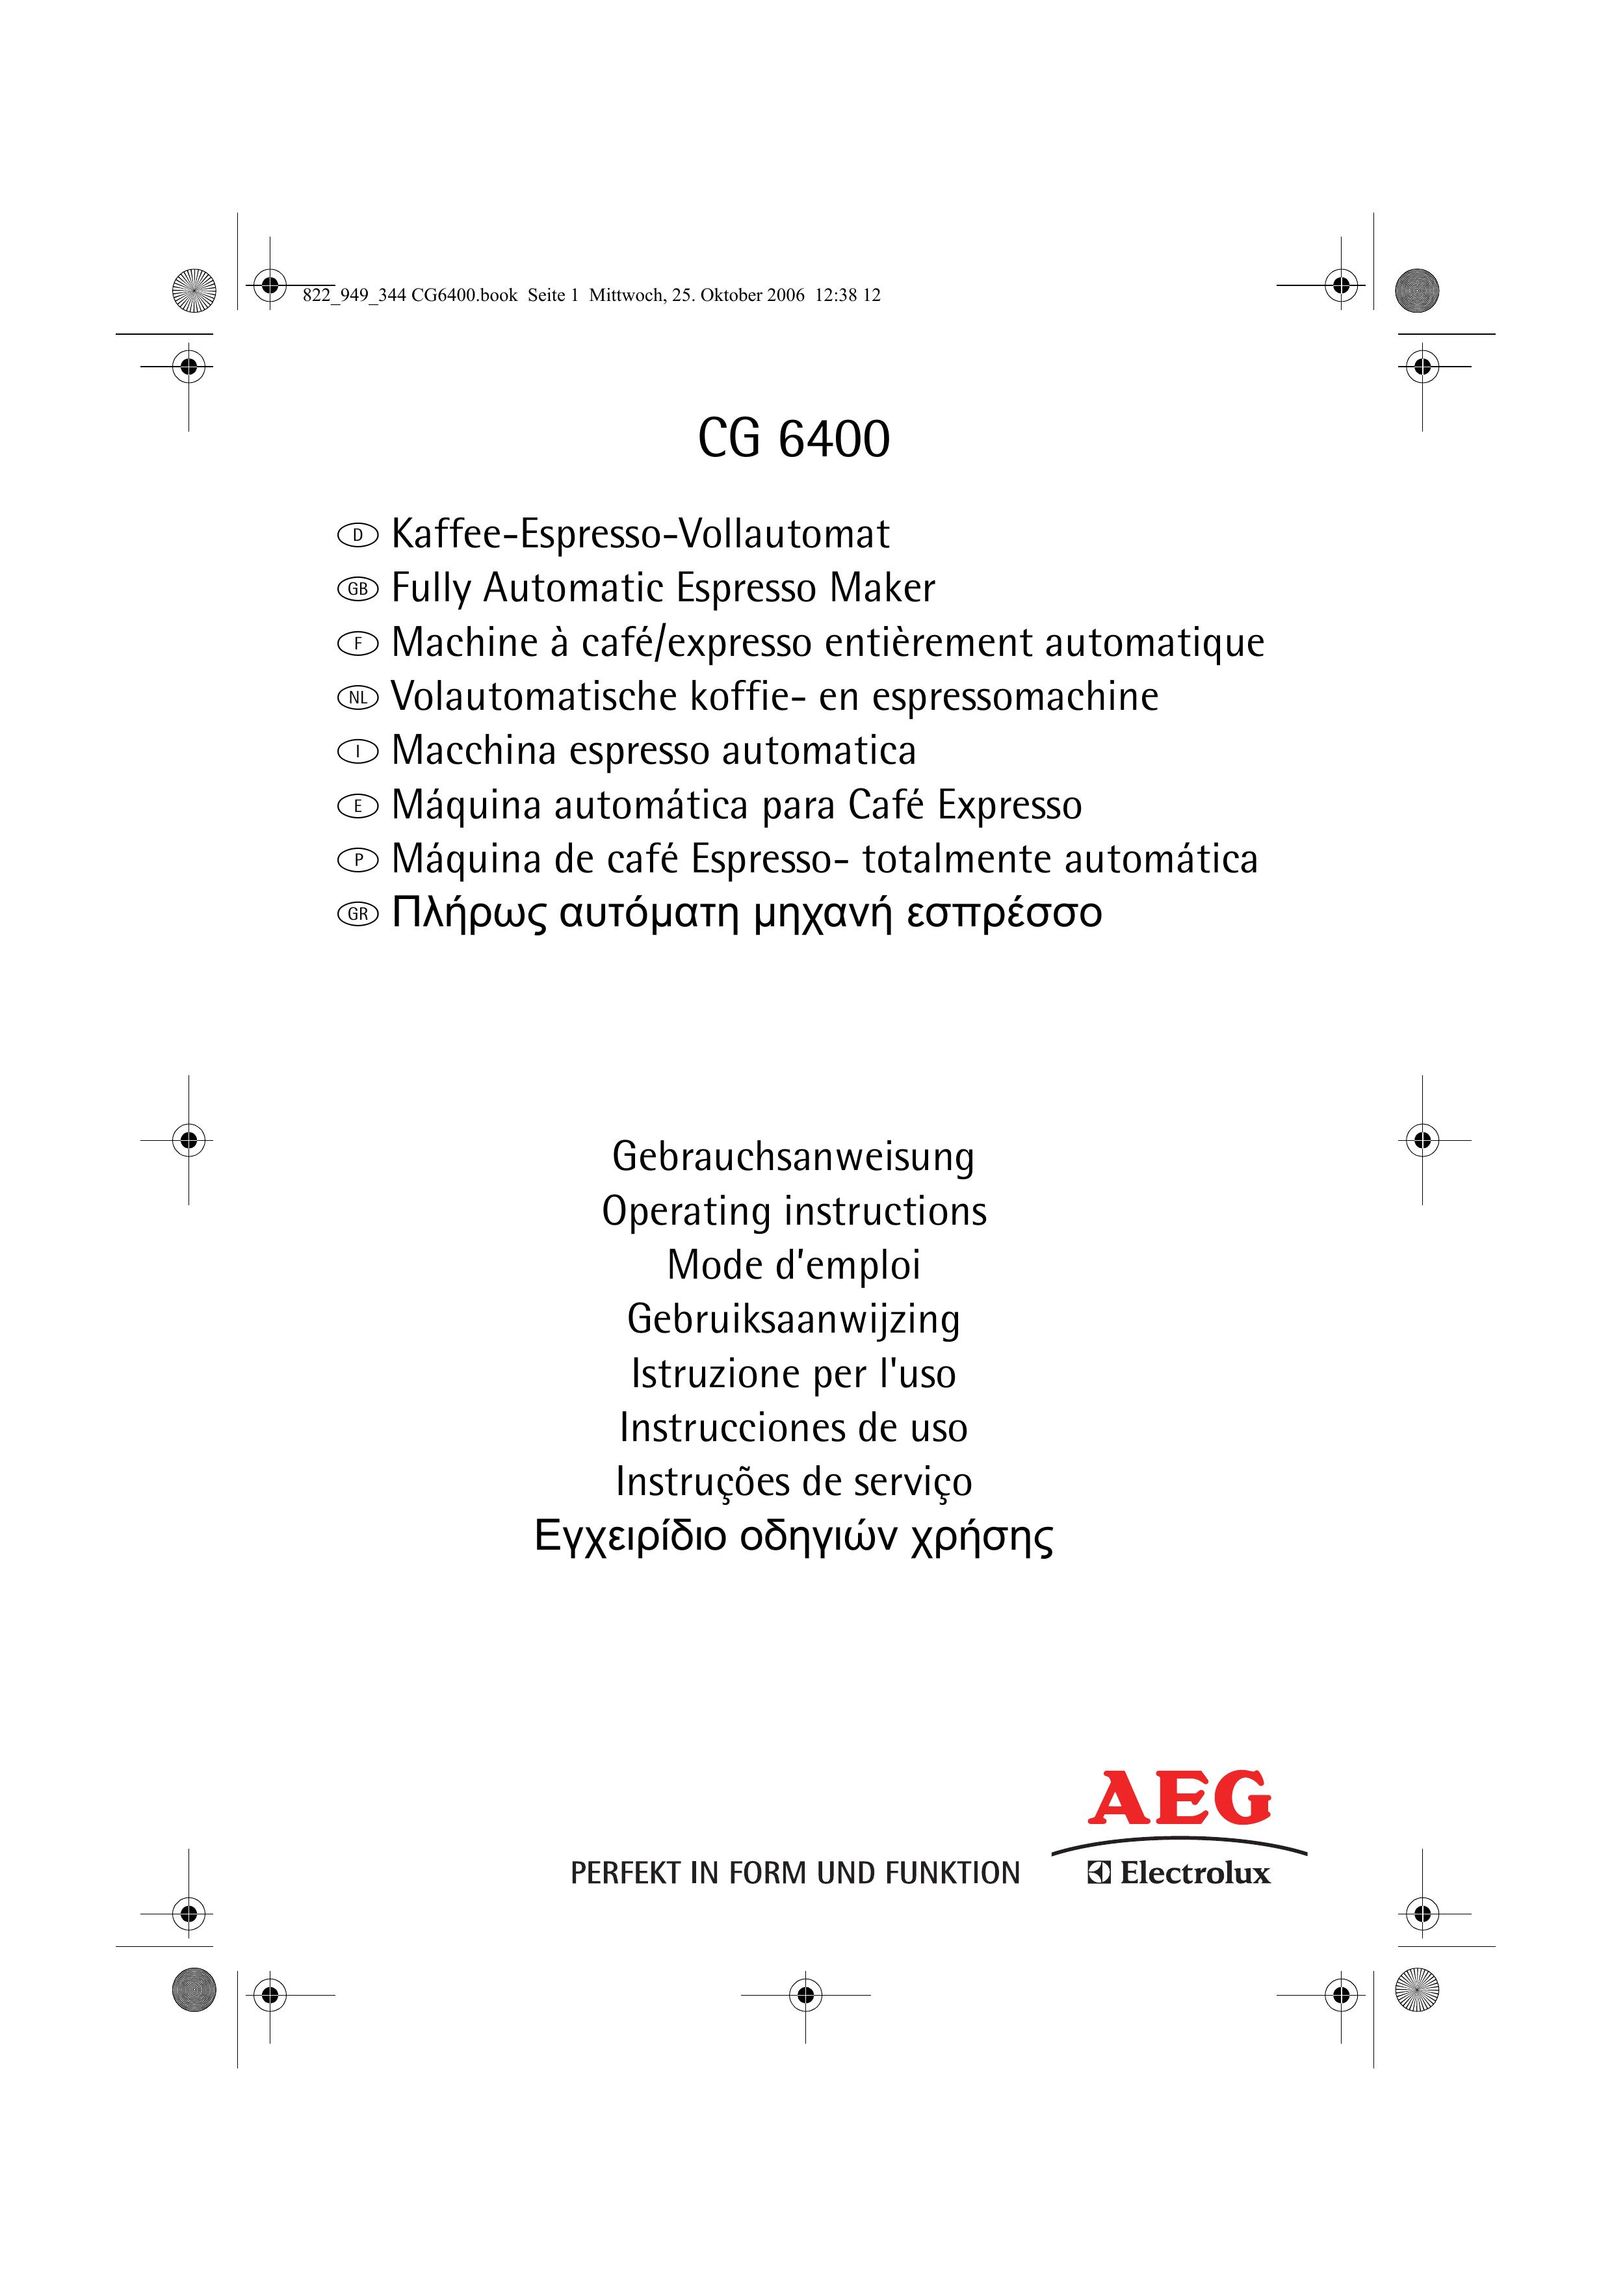 AEG CG 6400 Espresso Maker User Manual